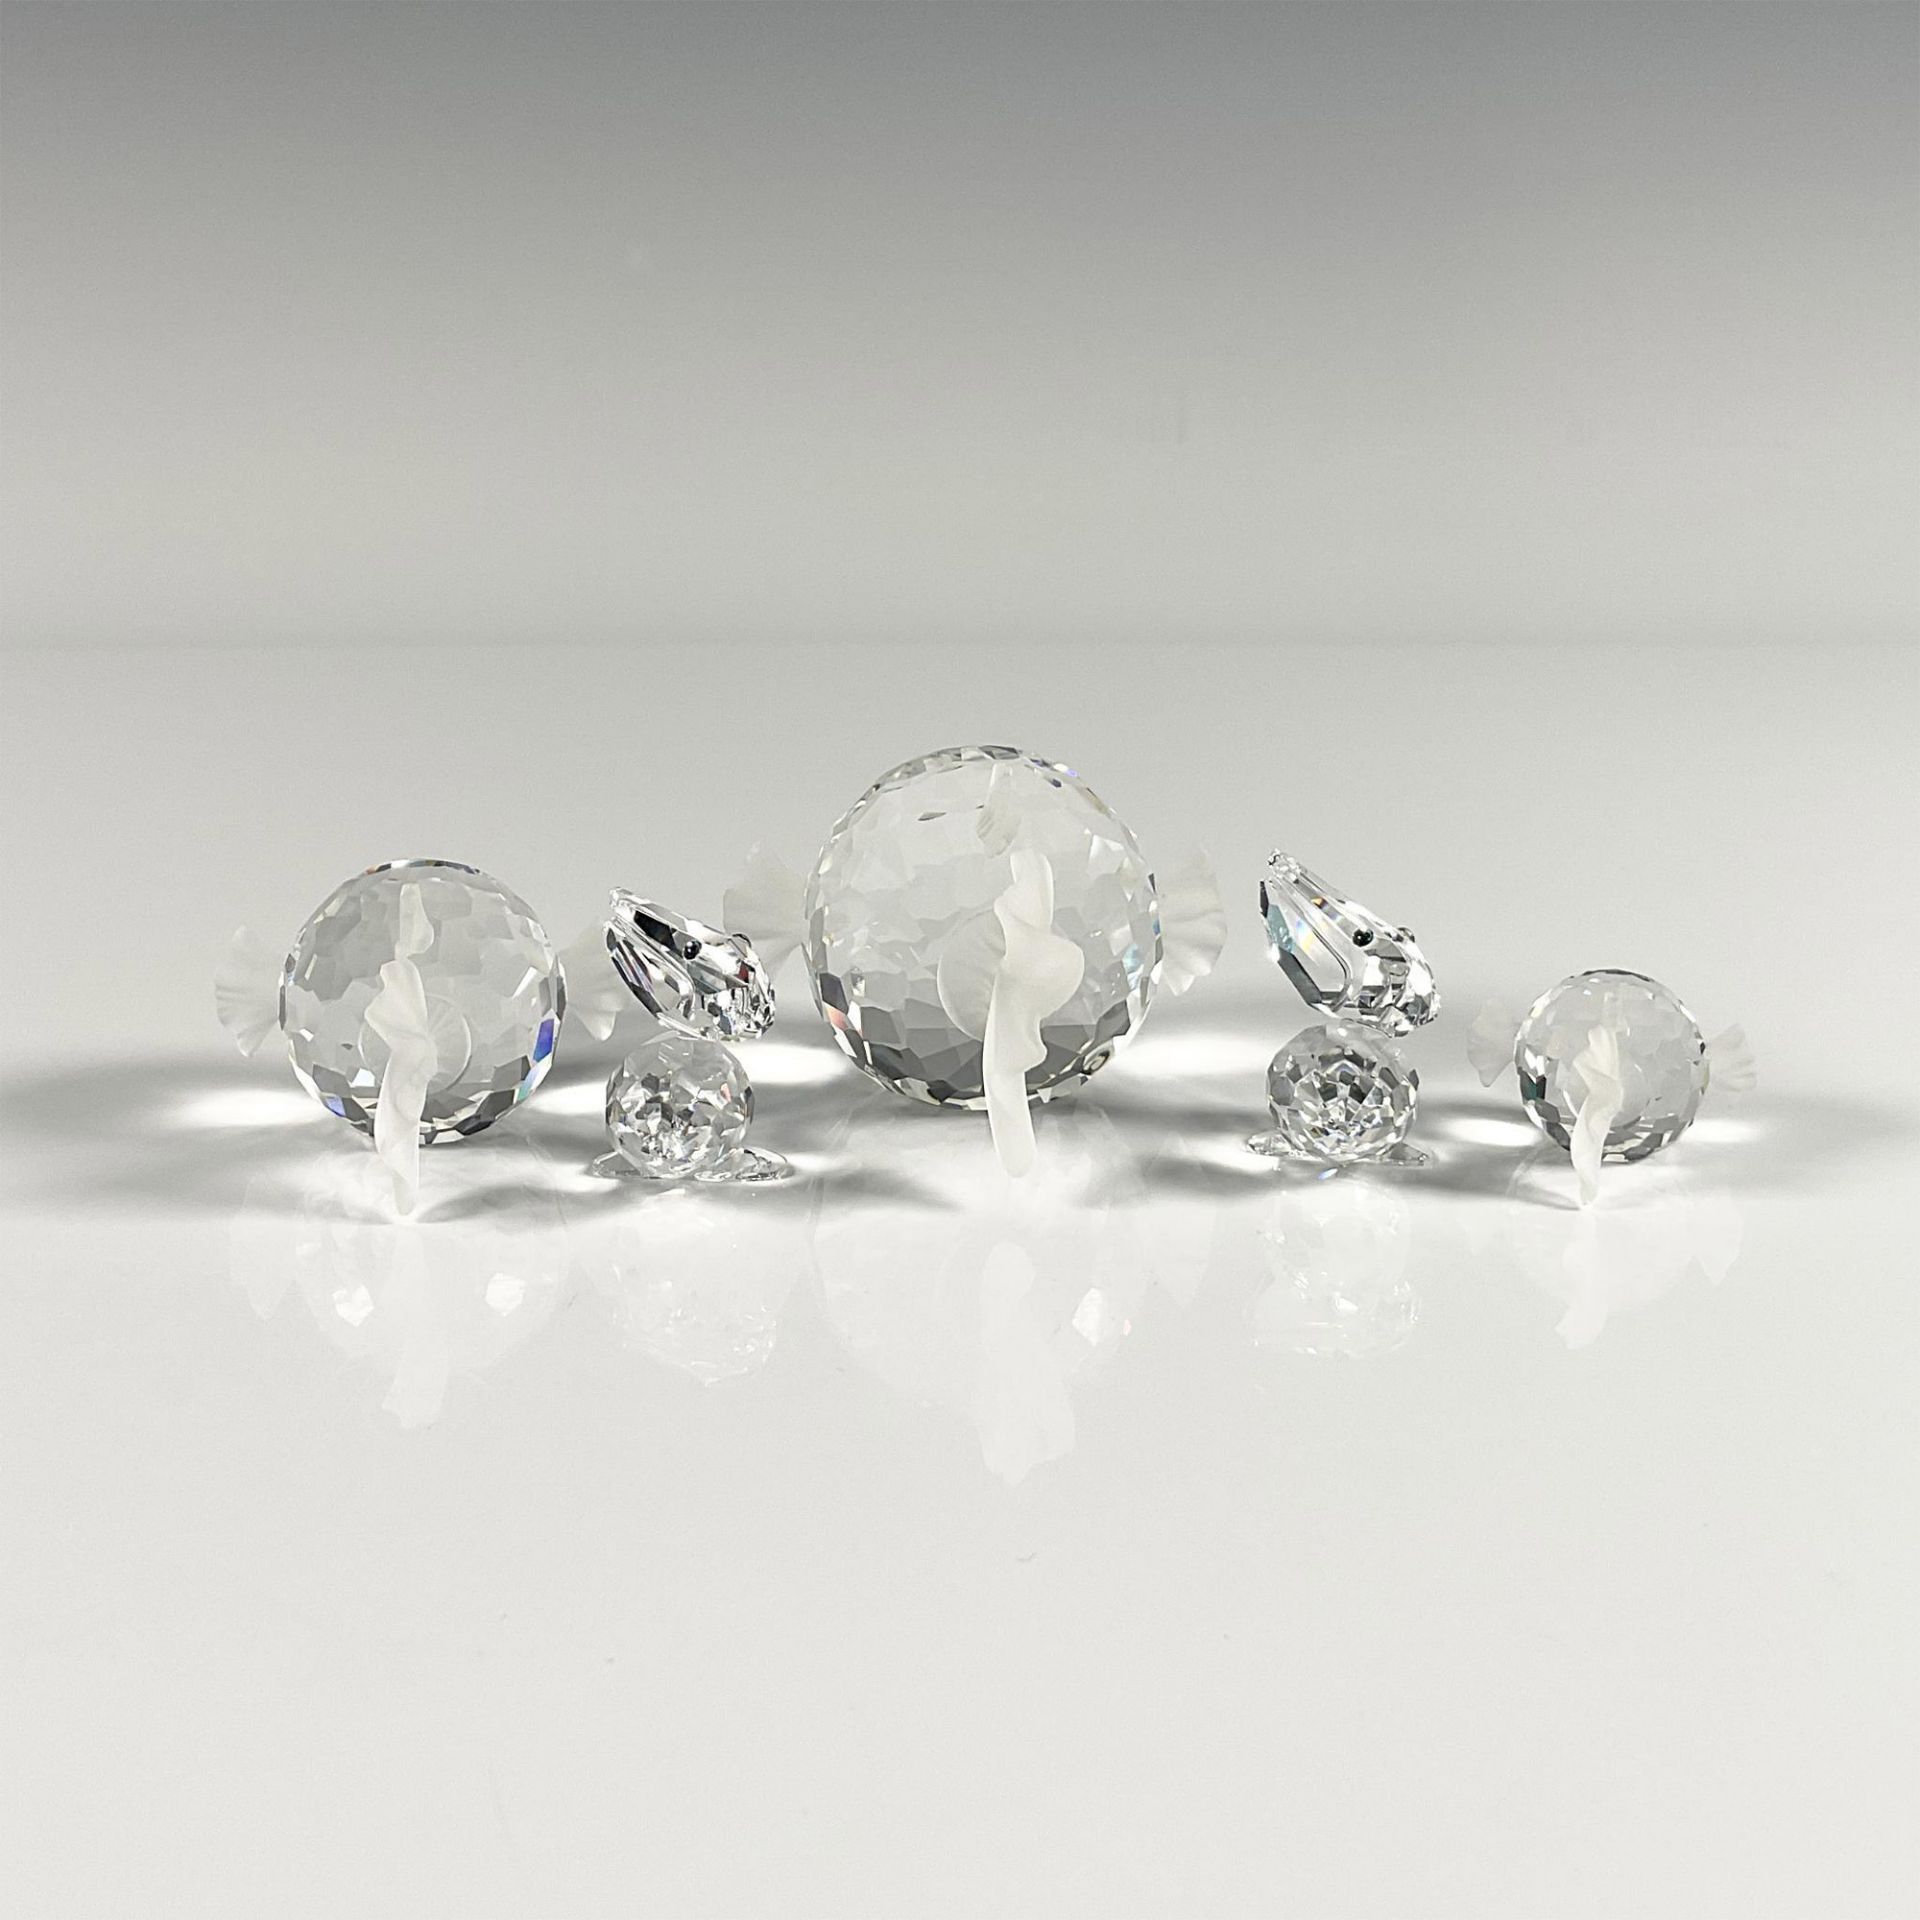 5pc Swarovski Crystal Aquatic Figurines - Bild 2 aus 3